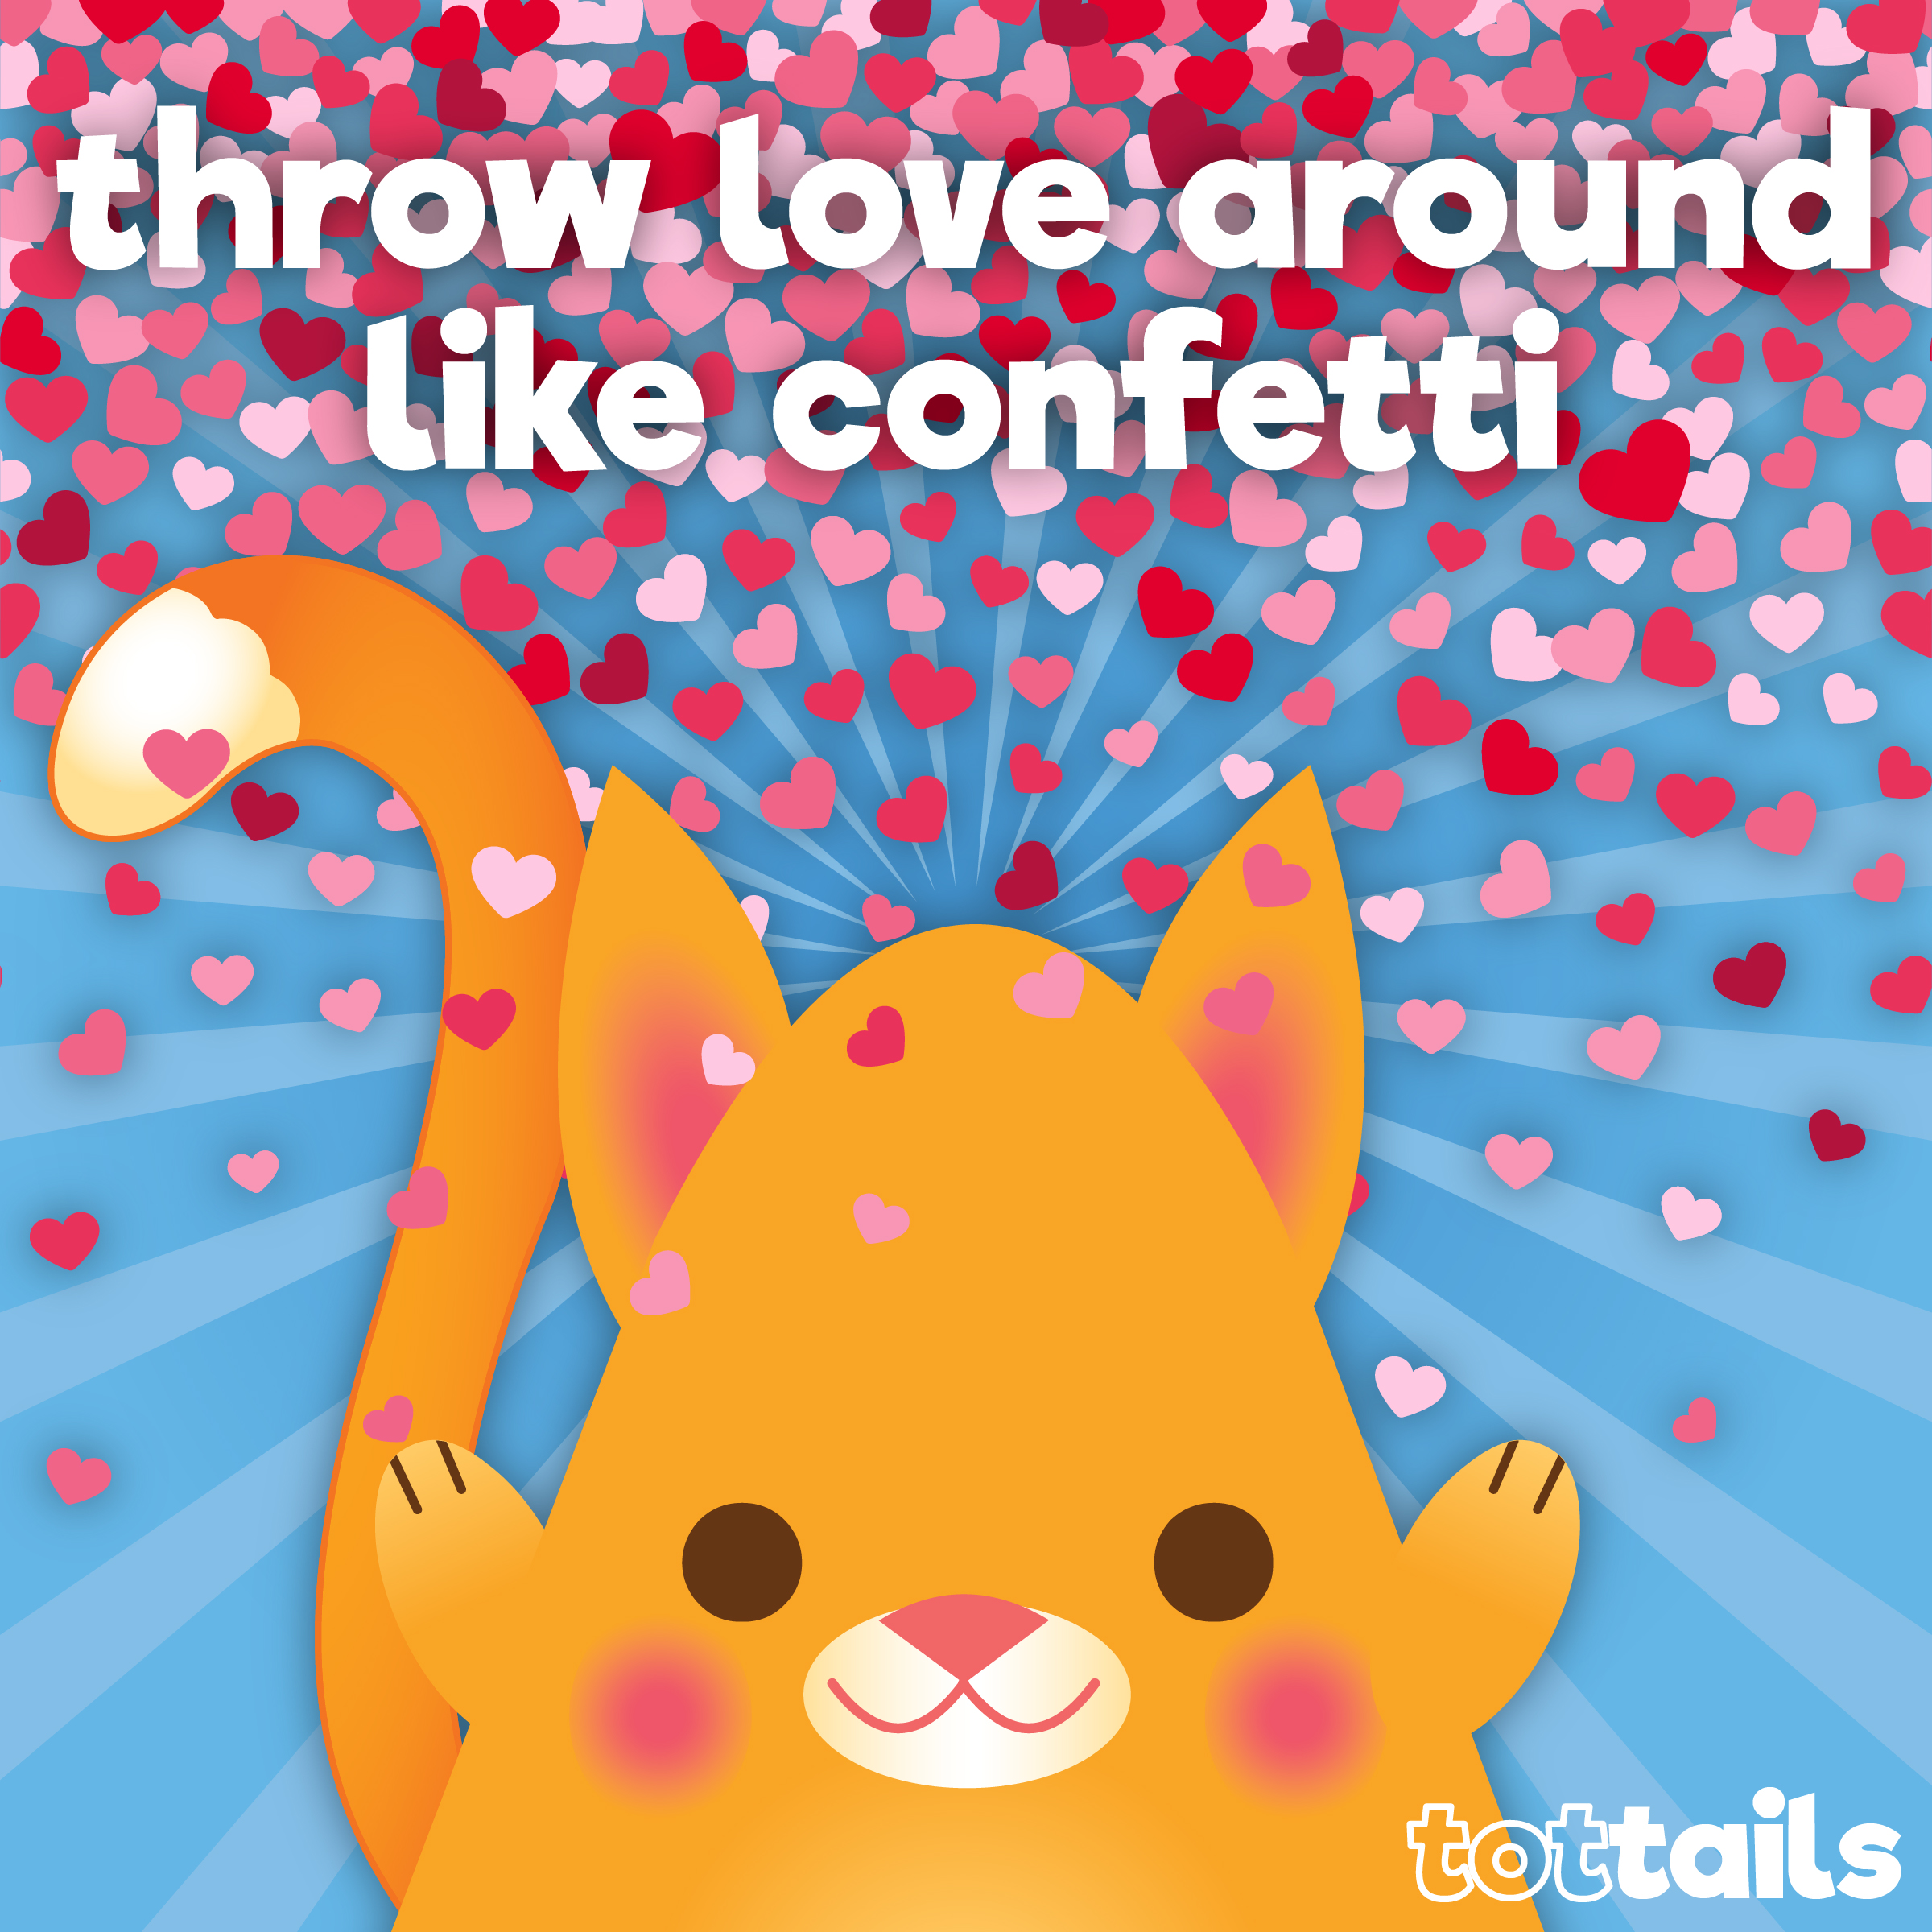 Positivity for kids - throw love around like confetti